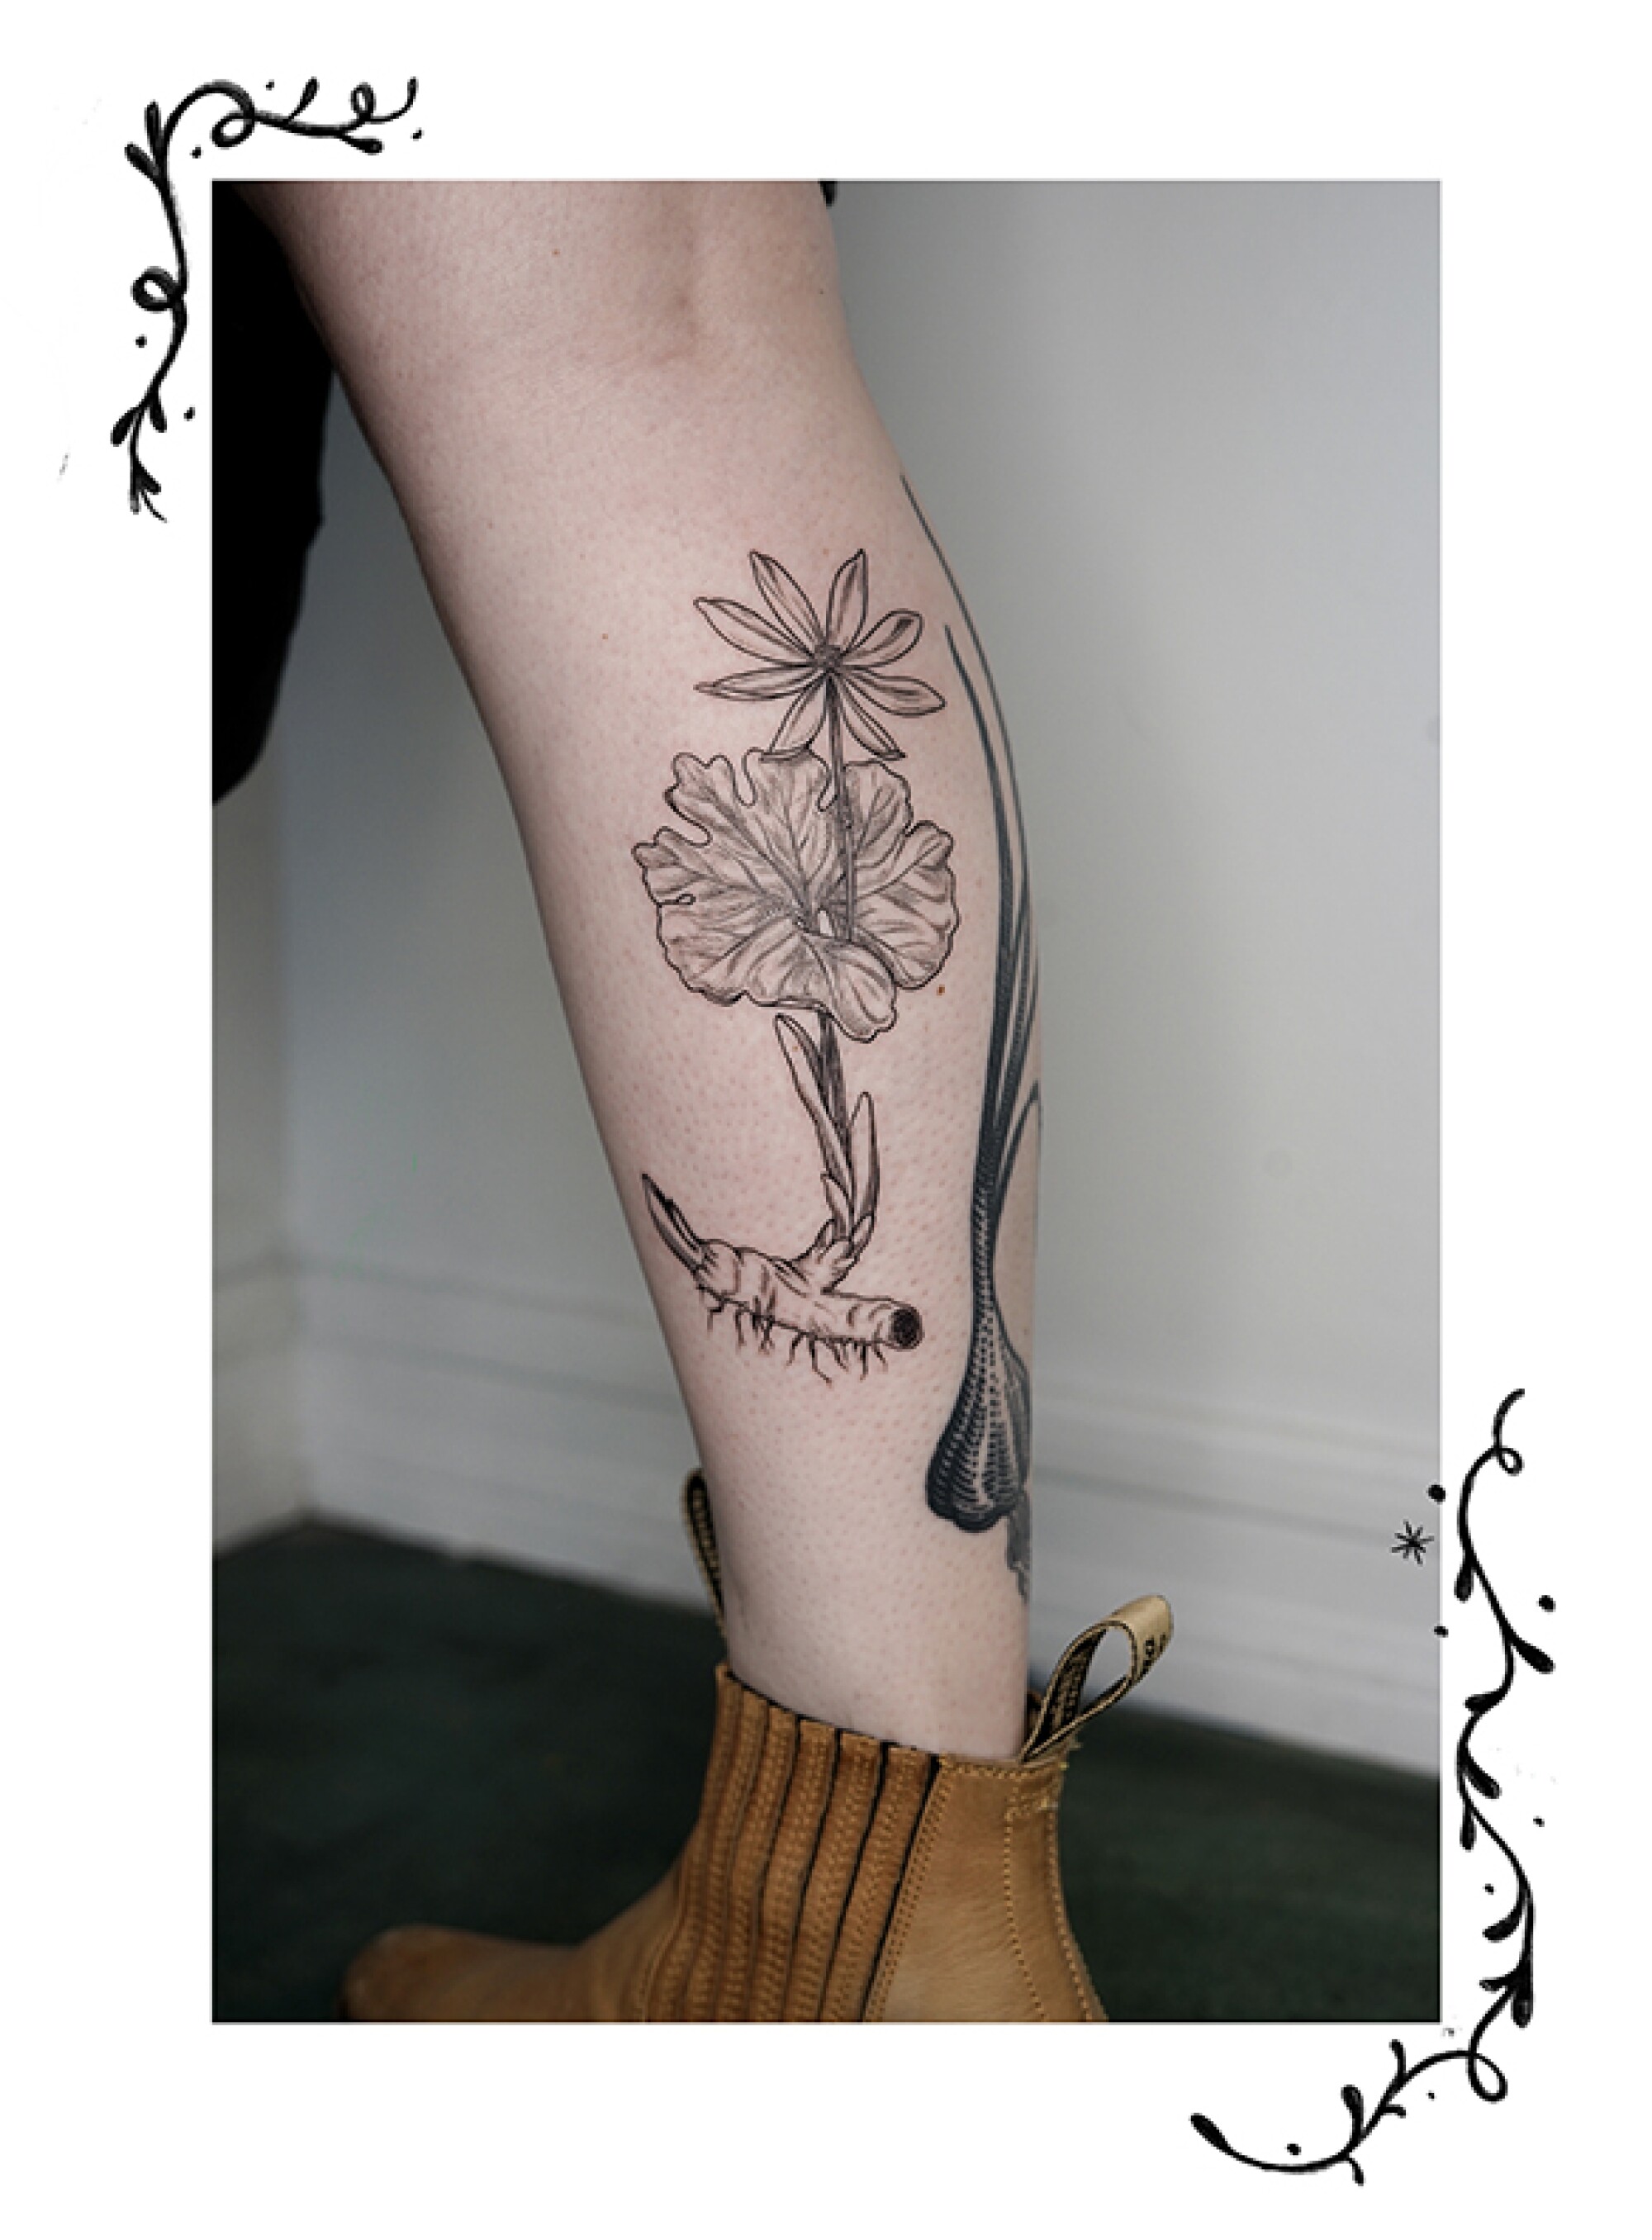 A wildflower tattoo on a leg. 